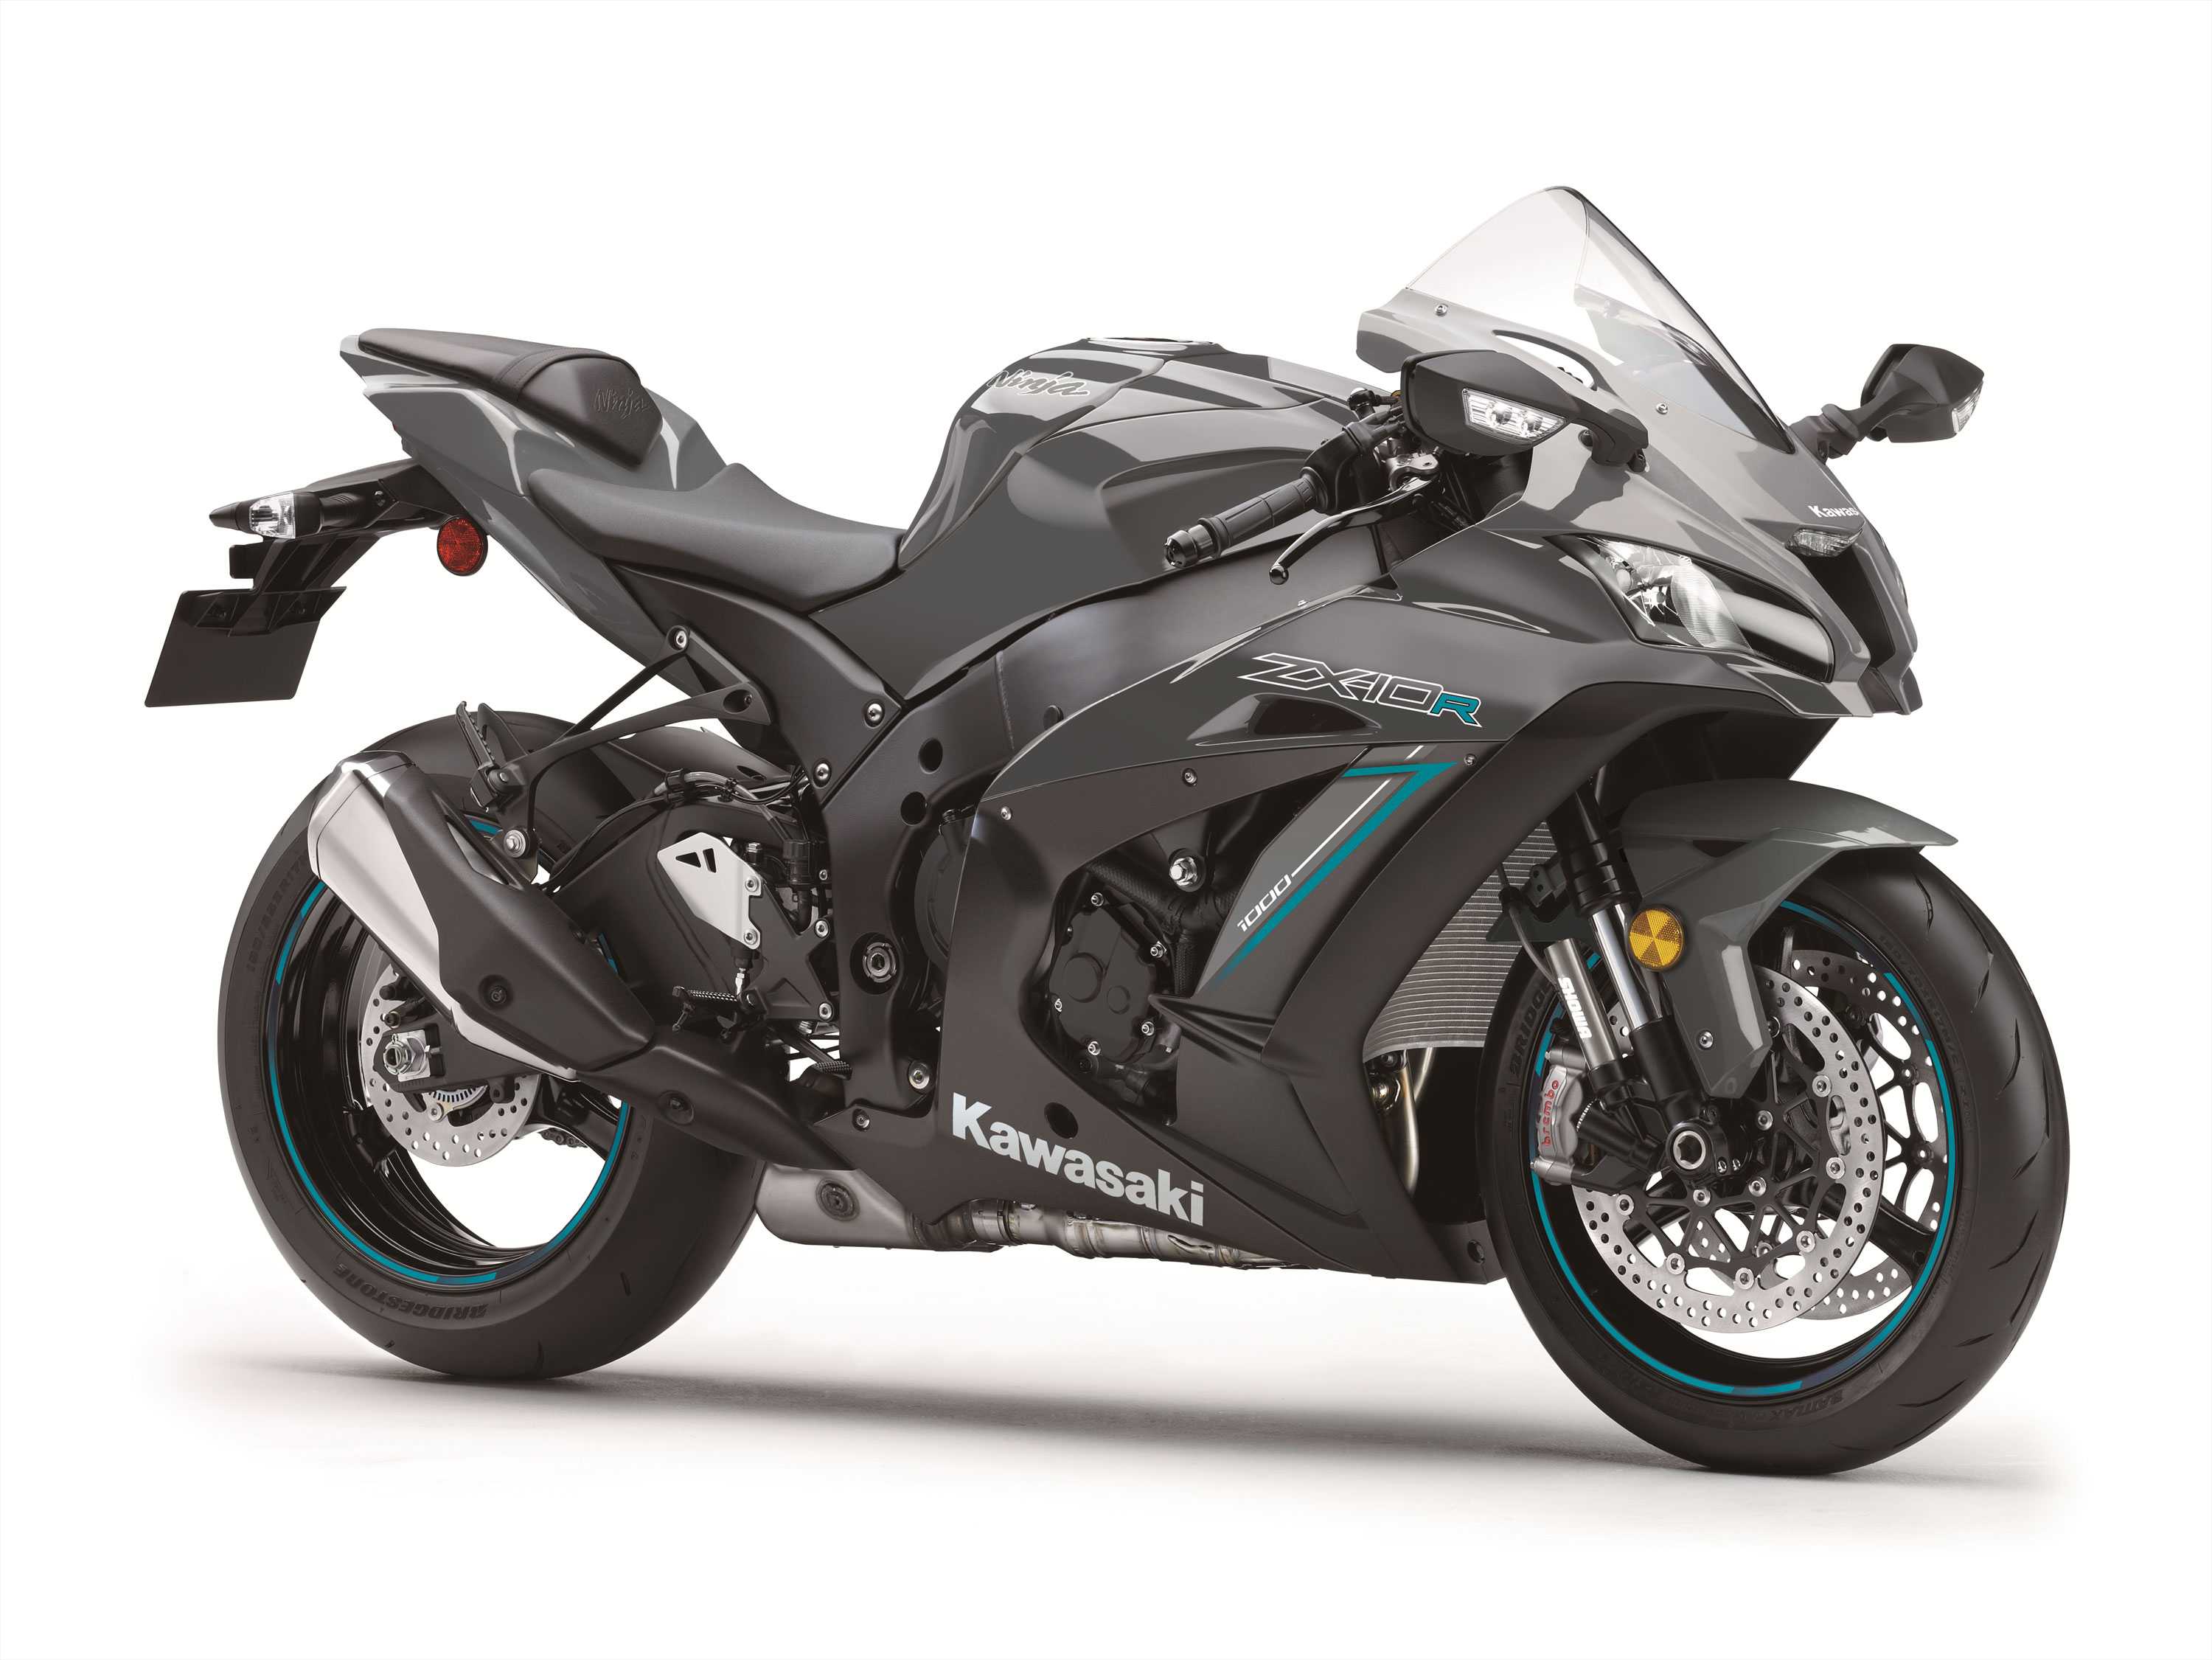 Kawasaki Unveils More Powerful 2019 Ninja ZX-10R - Roadracing World Magazine | Motorcycle Riding, Racing & Tech